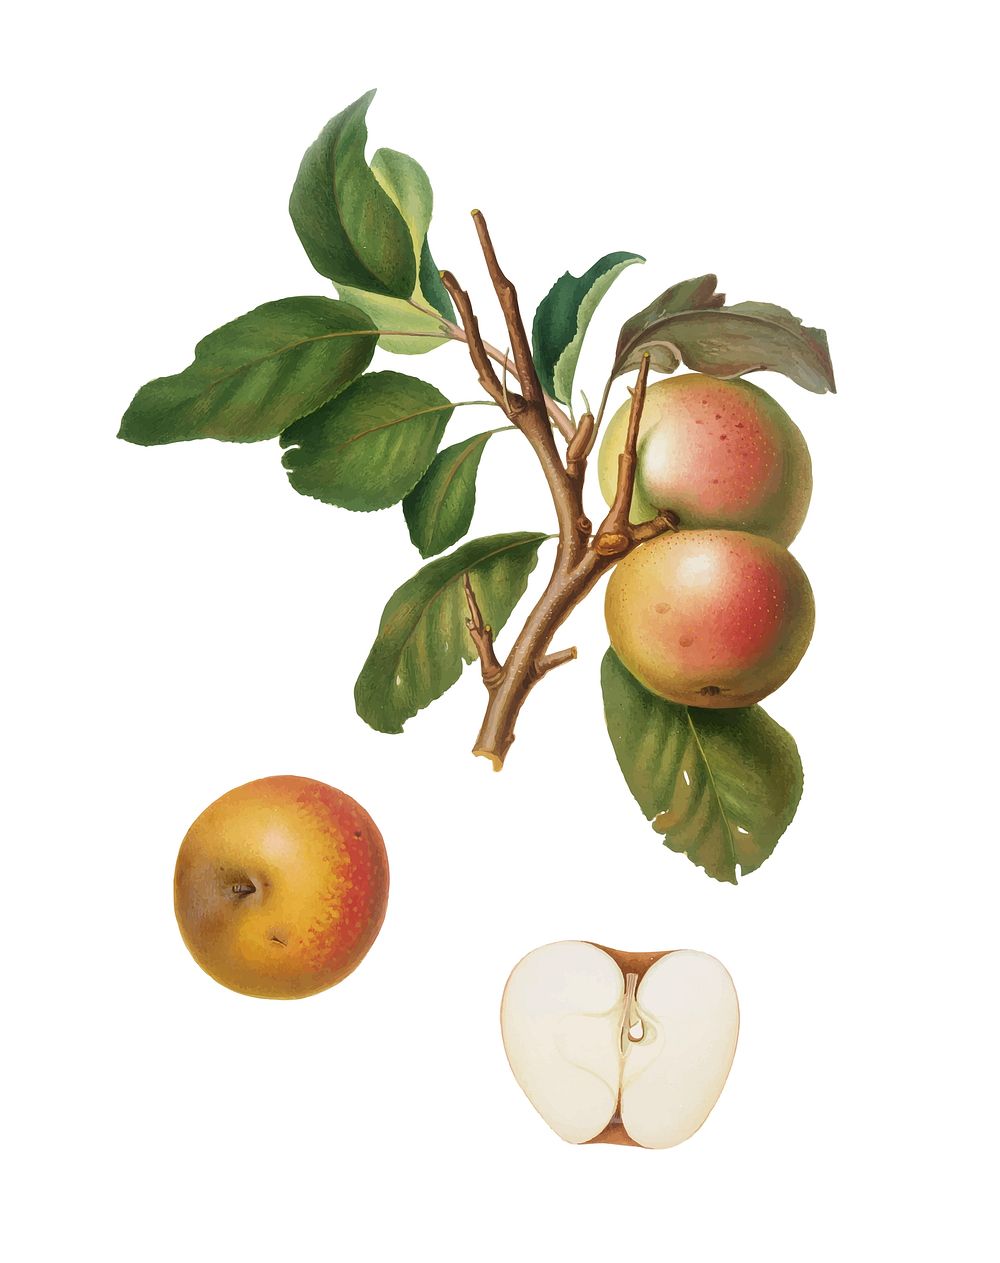 Pupina Apple from Pomona Italiana (1817-1839) by Giorgio Gallesio (1772-1839). Original from New York public library.…